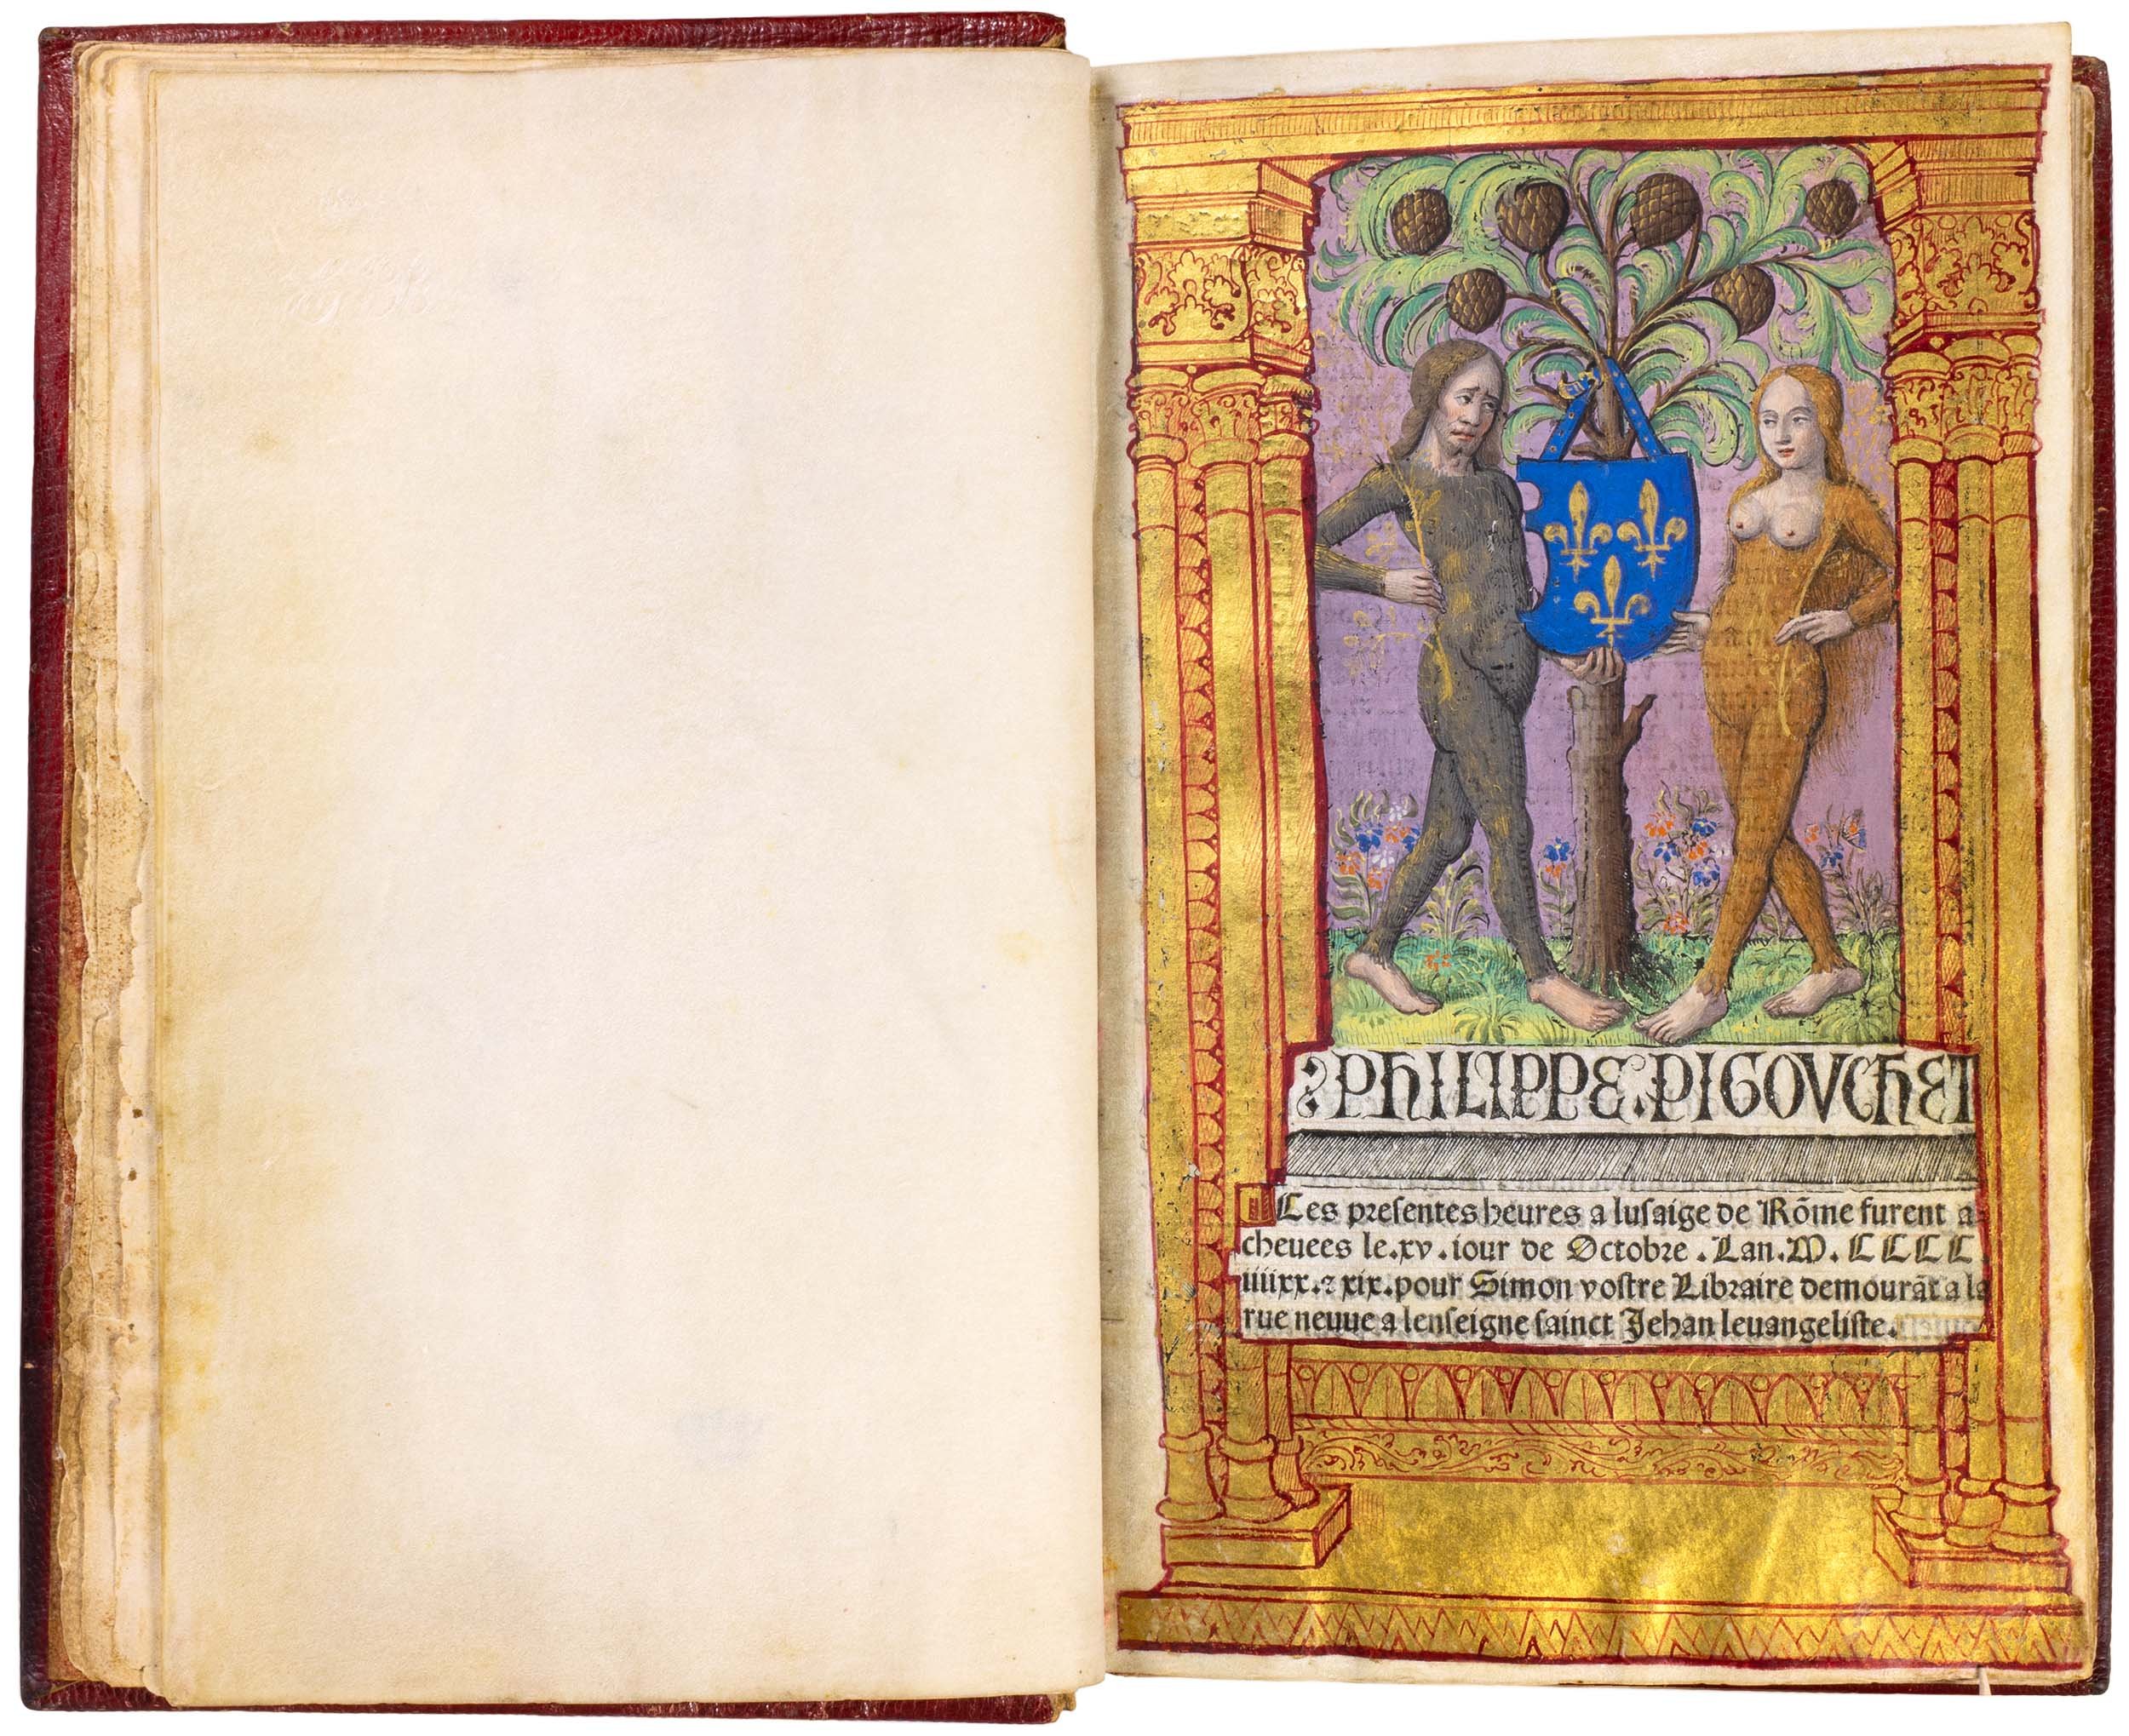 Horae-bmv-book-of-hours-Louis-XII-martainville-master-philippa-guelders-paris-pigouchet-vostre-15.10.1499-5.jpg